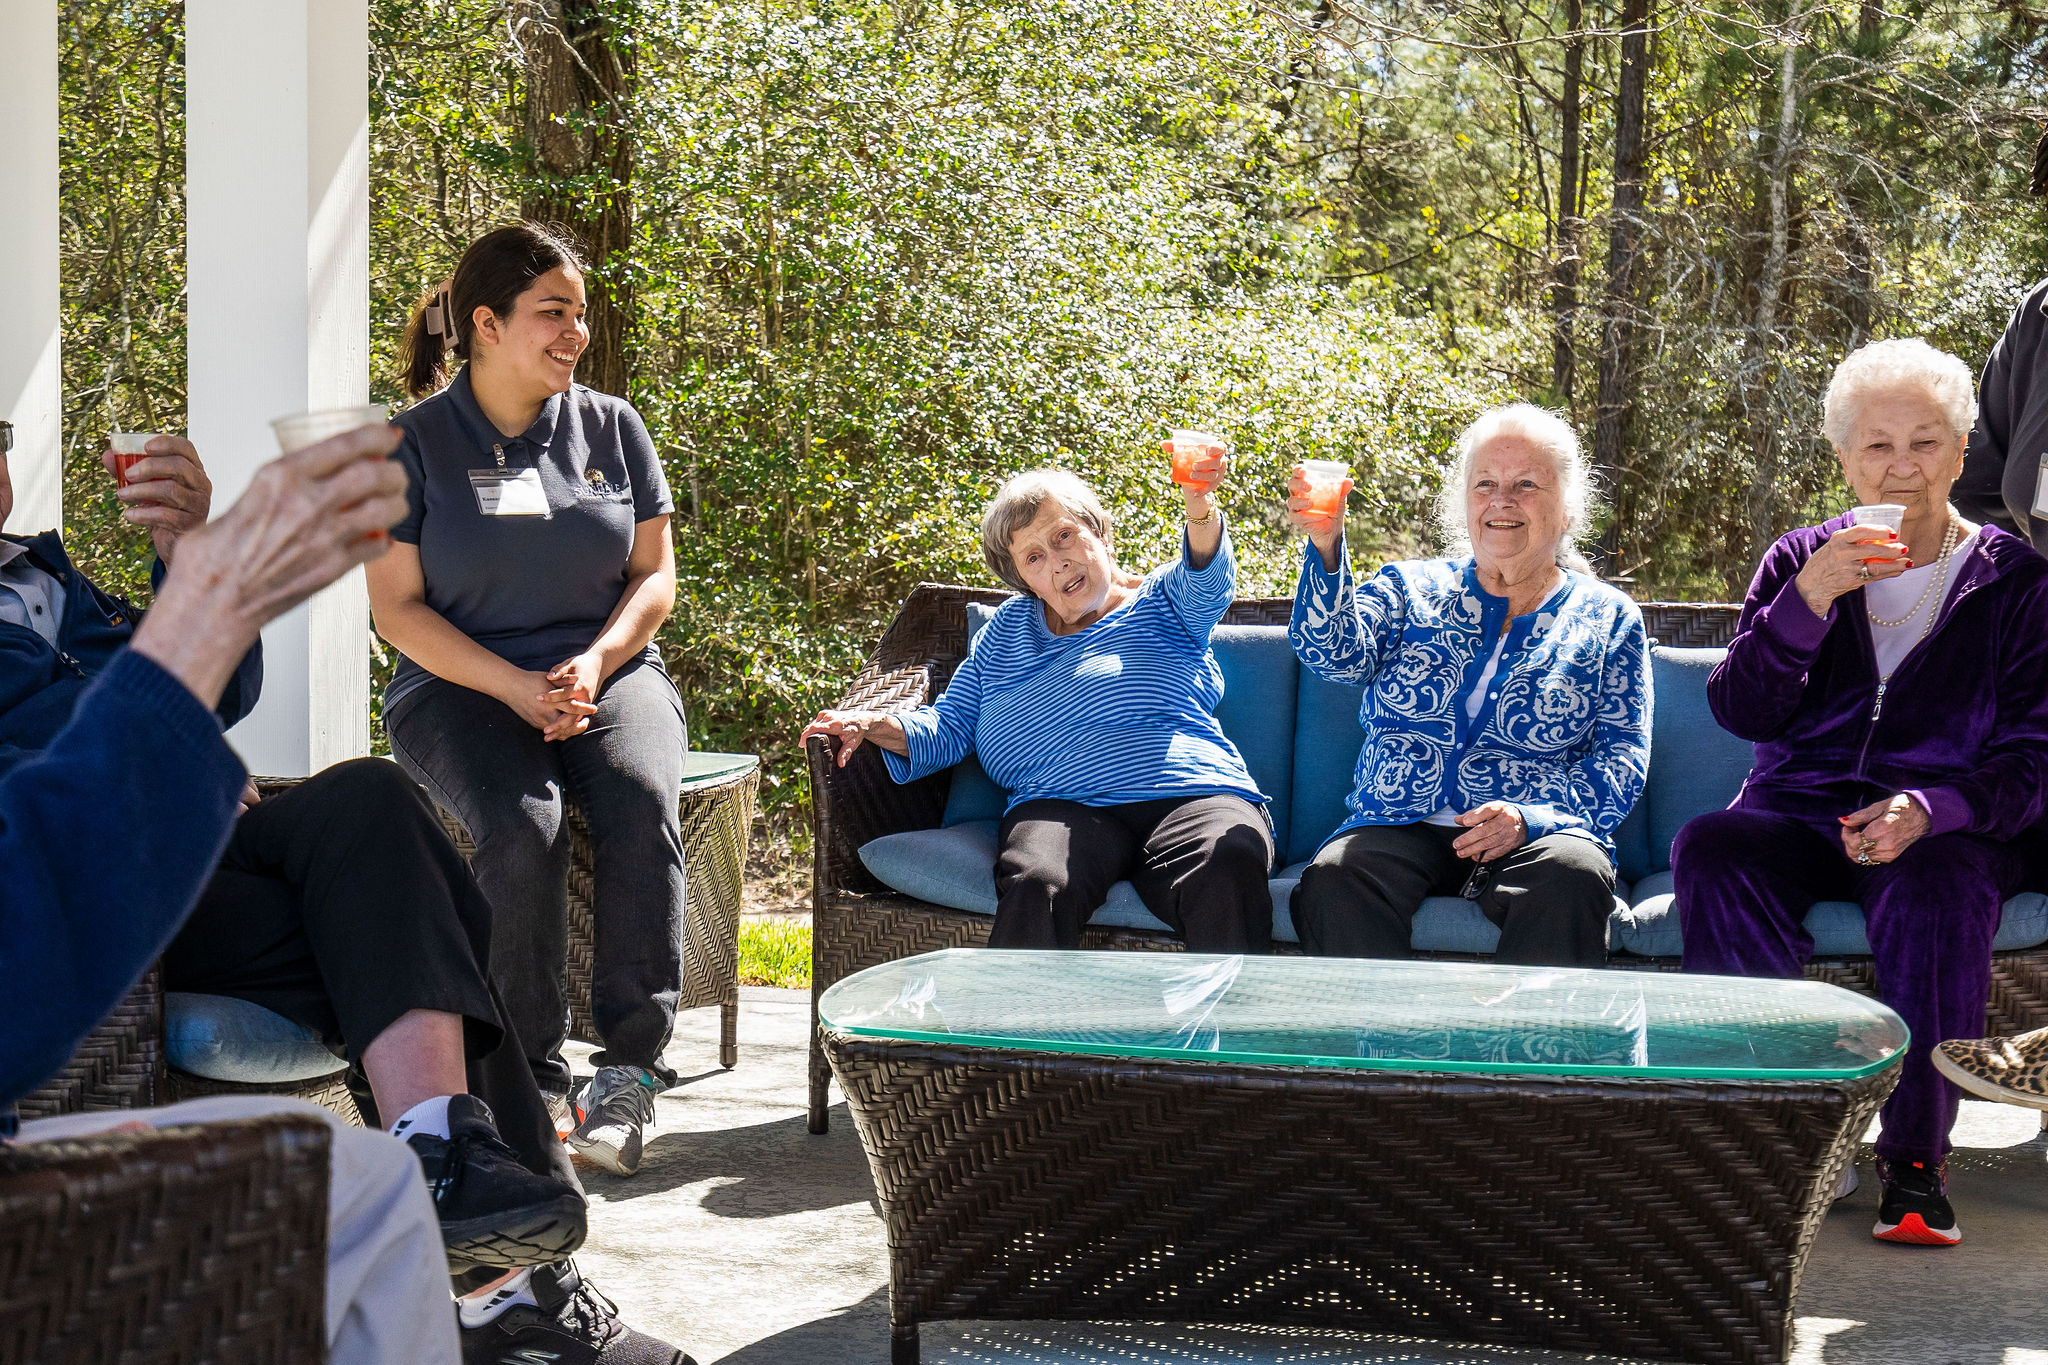 Residents of Sundale Senior Living in Huntsville, TX, "cheersing" each other with lemonade beneath the outdoor veranda